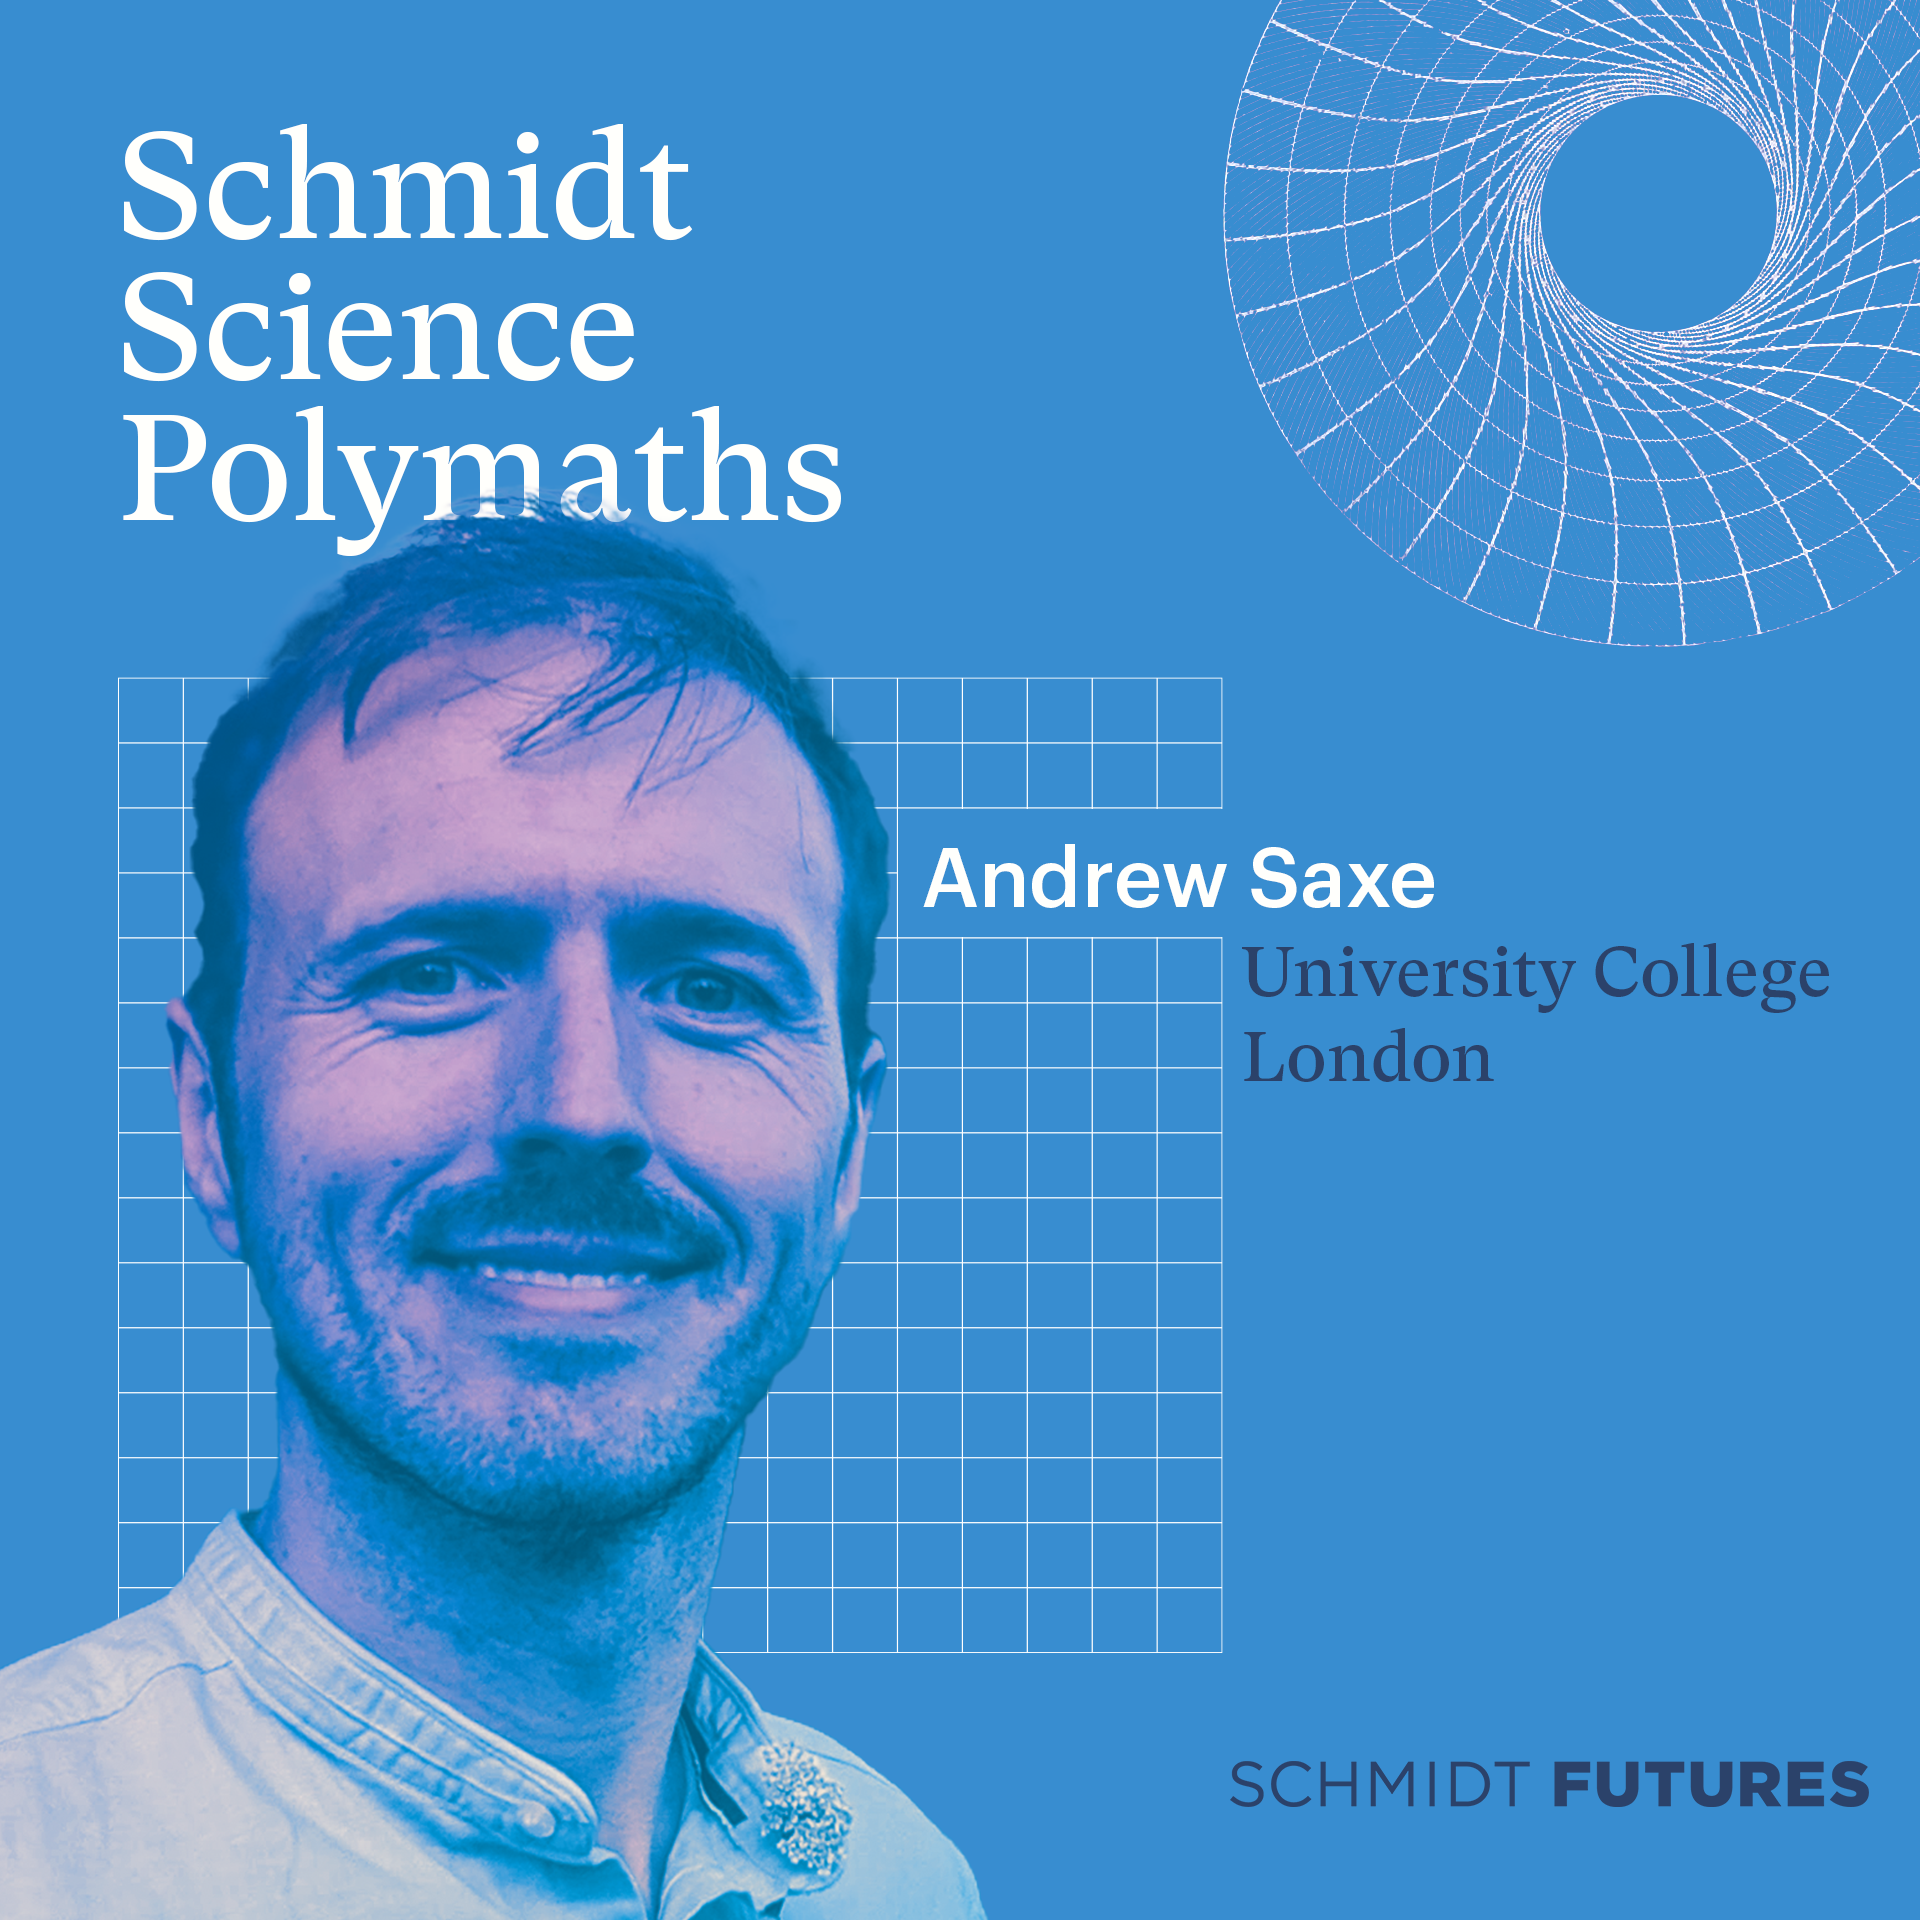 Andrew Saxe Polymaths Award Graphic